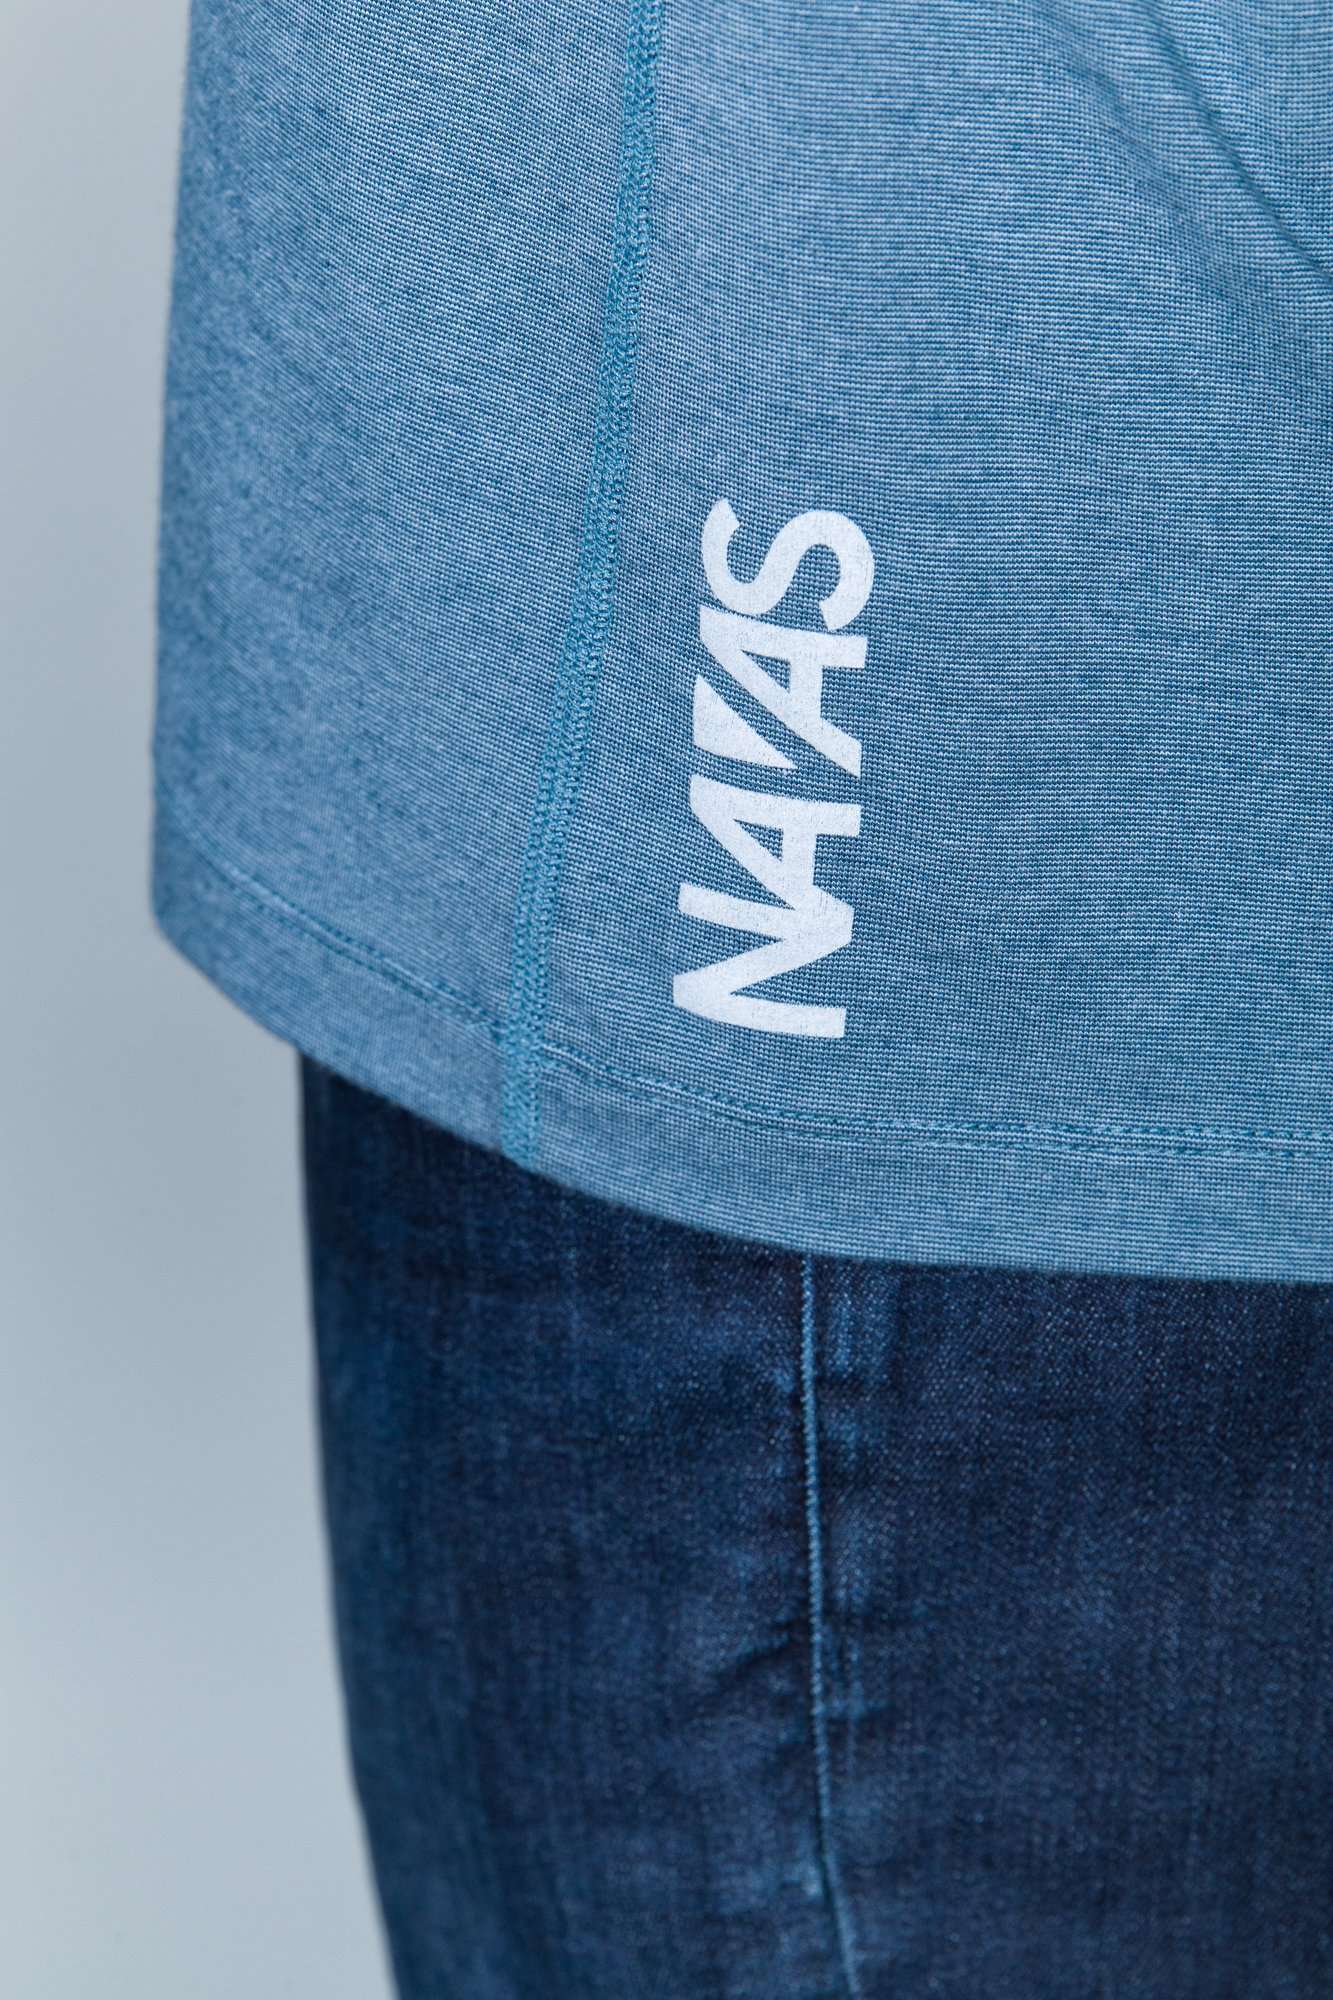 The Navas Lab Drake V2 microstripe tall tee v-neck in light blue logo detail. Long T-shirt for tall guys for everyday use.